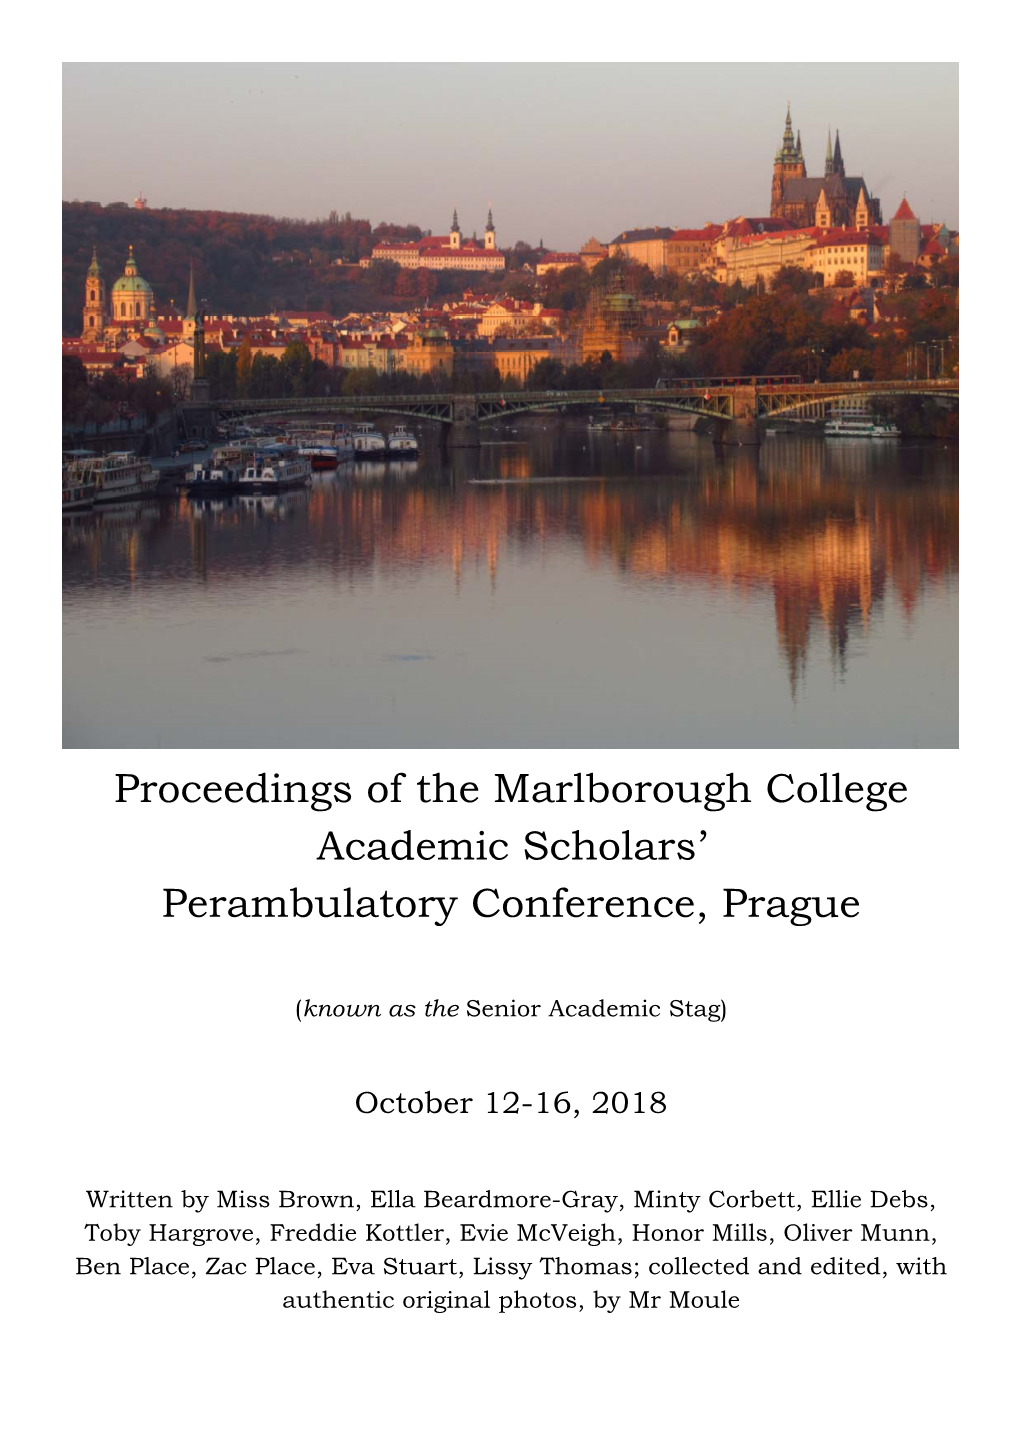 Proceedings of the Marlborough College Academic Scholars’ Perambulatory Conference, Prague